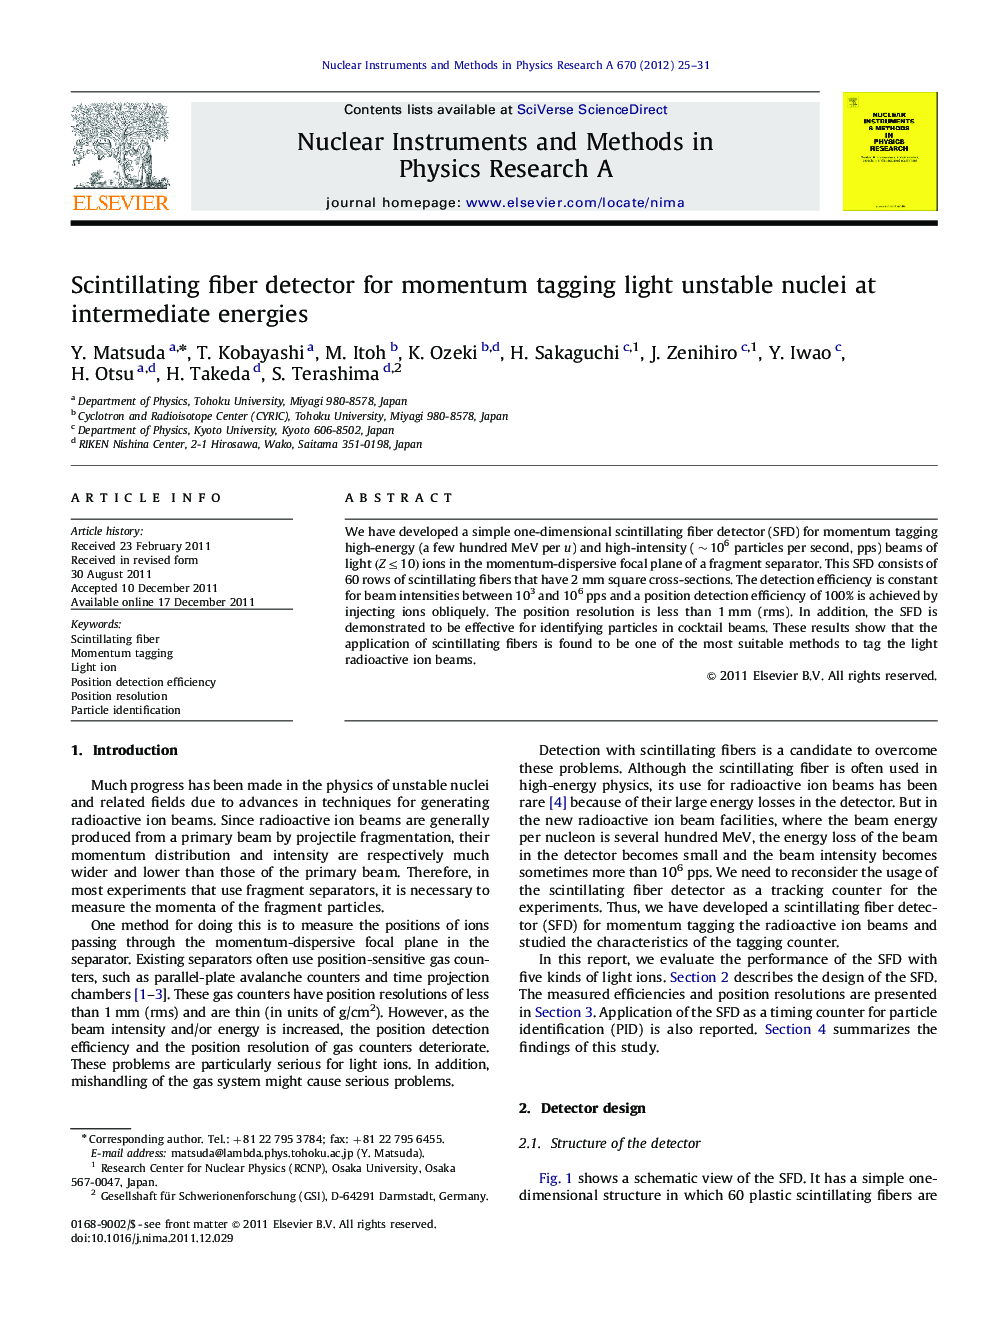 Scintillating fiber detector for momentum tagging light unstable nuclei at intermediate energies